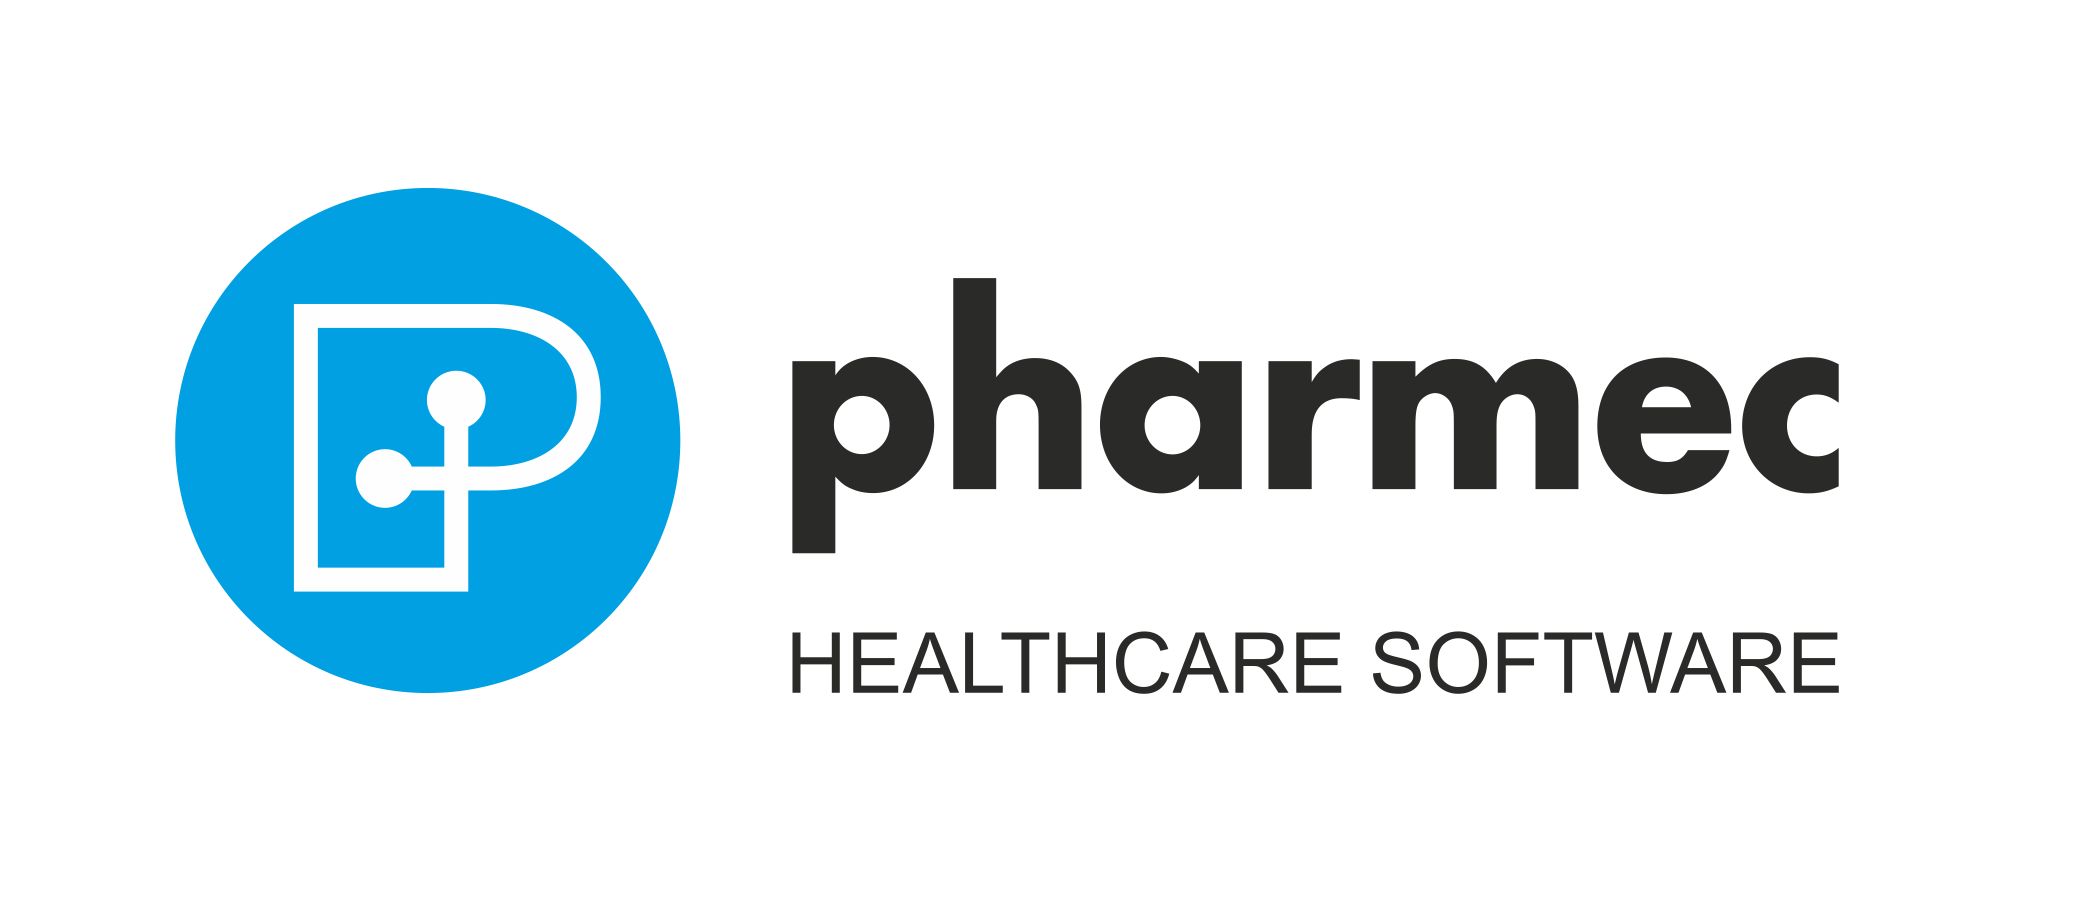 Pharmec Healthcare Software